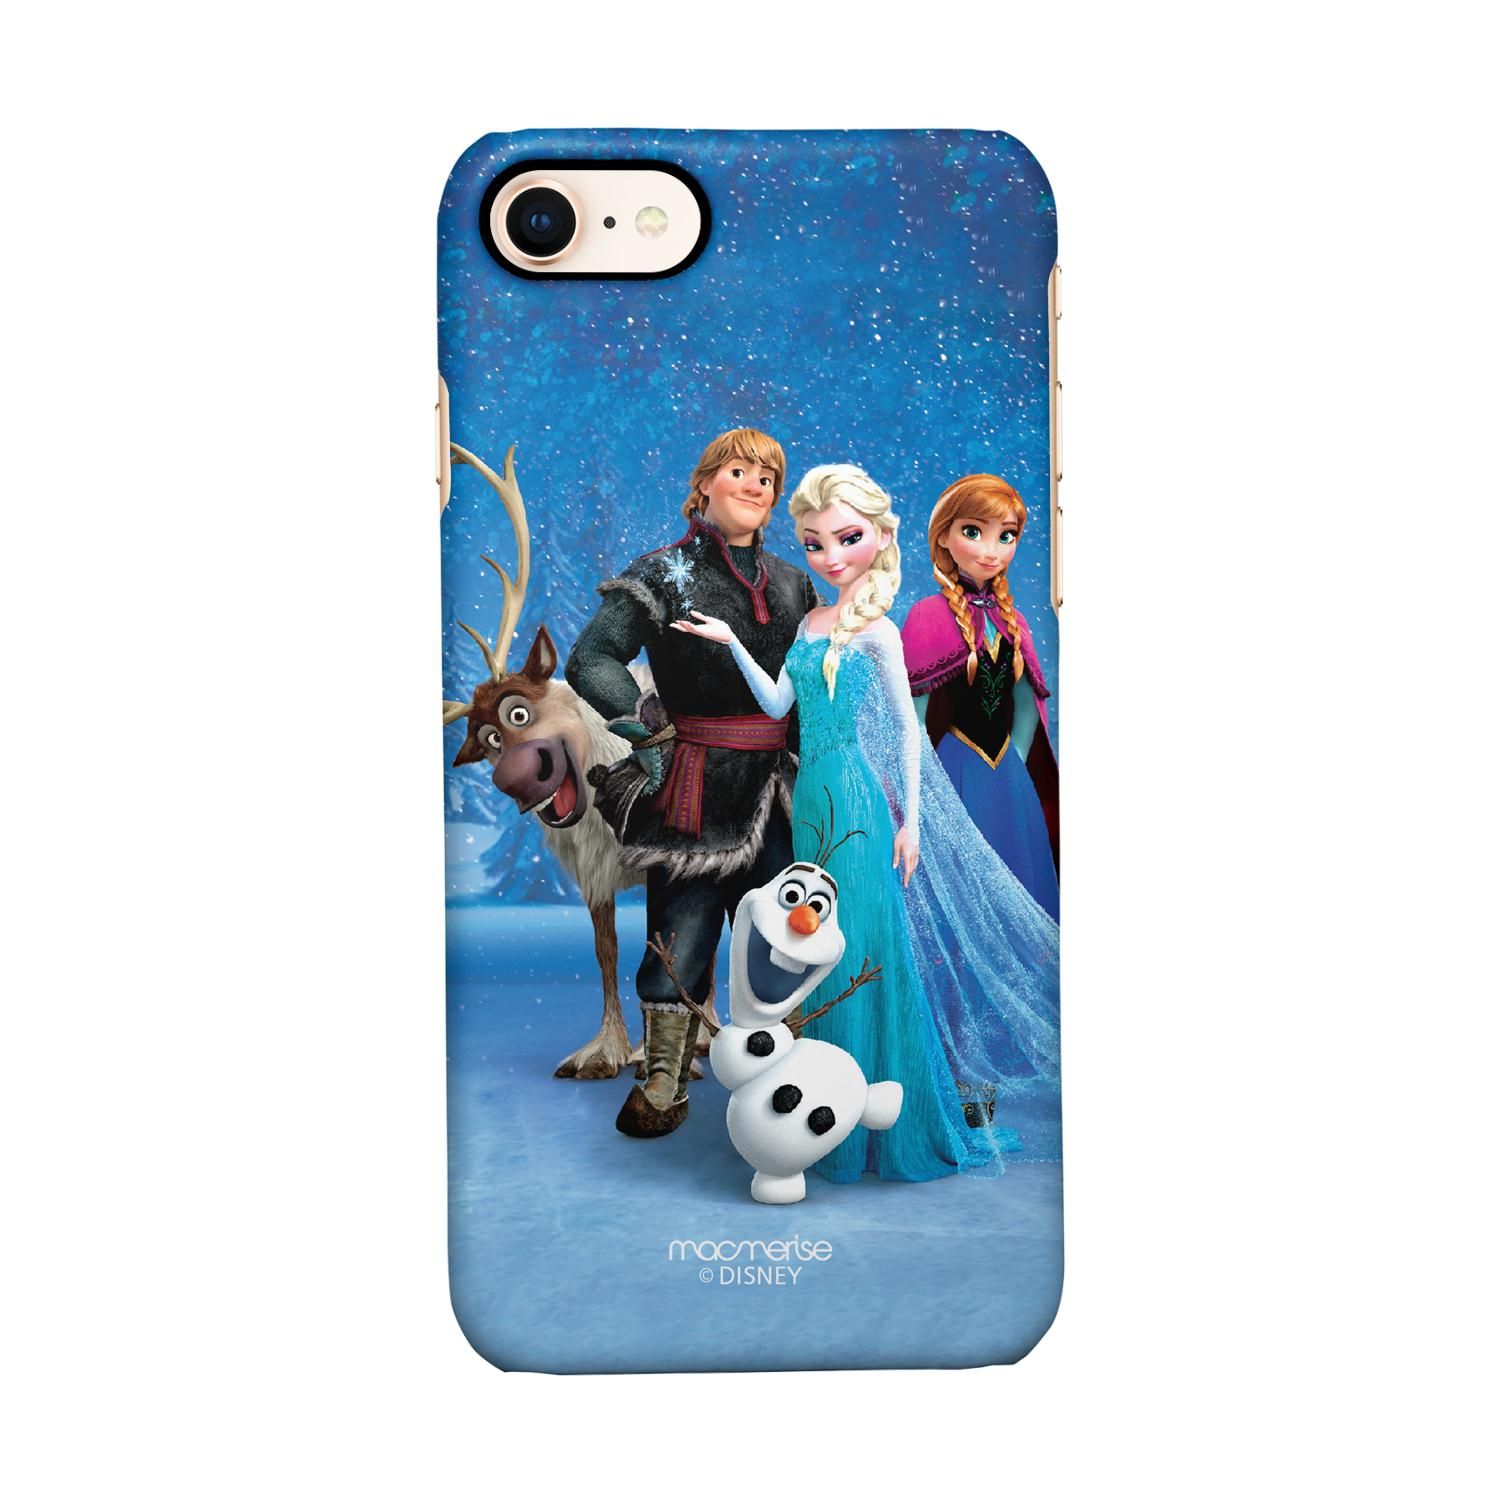 Buy Frozen together - Sleek Phone Case for iPhone 7 Online